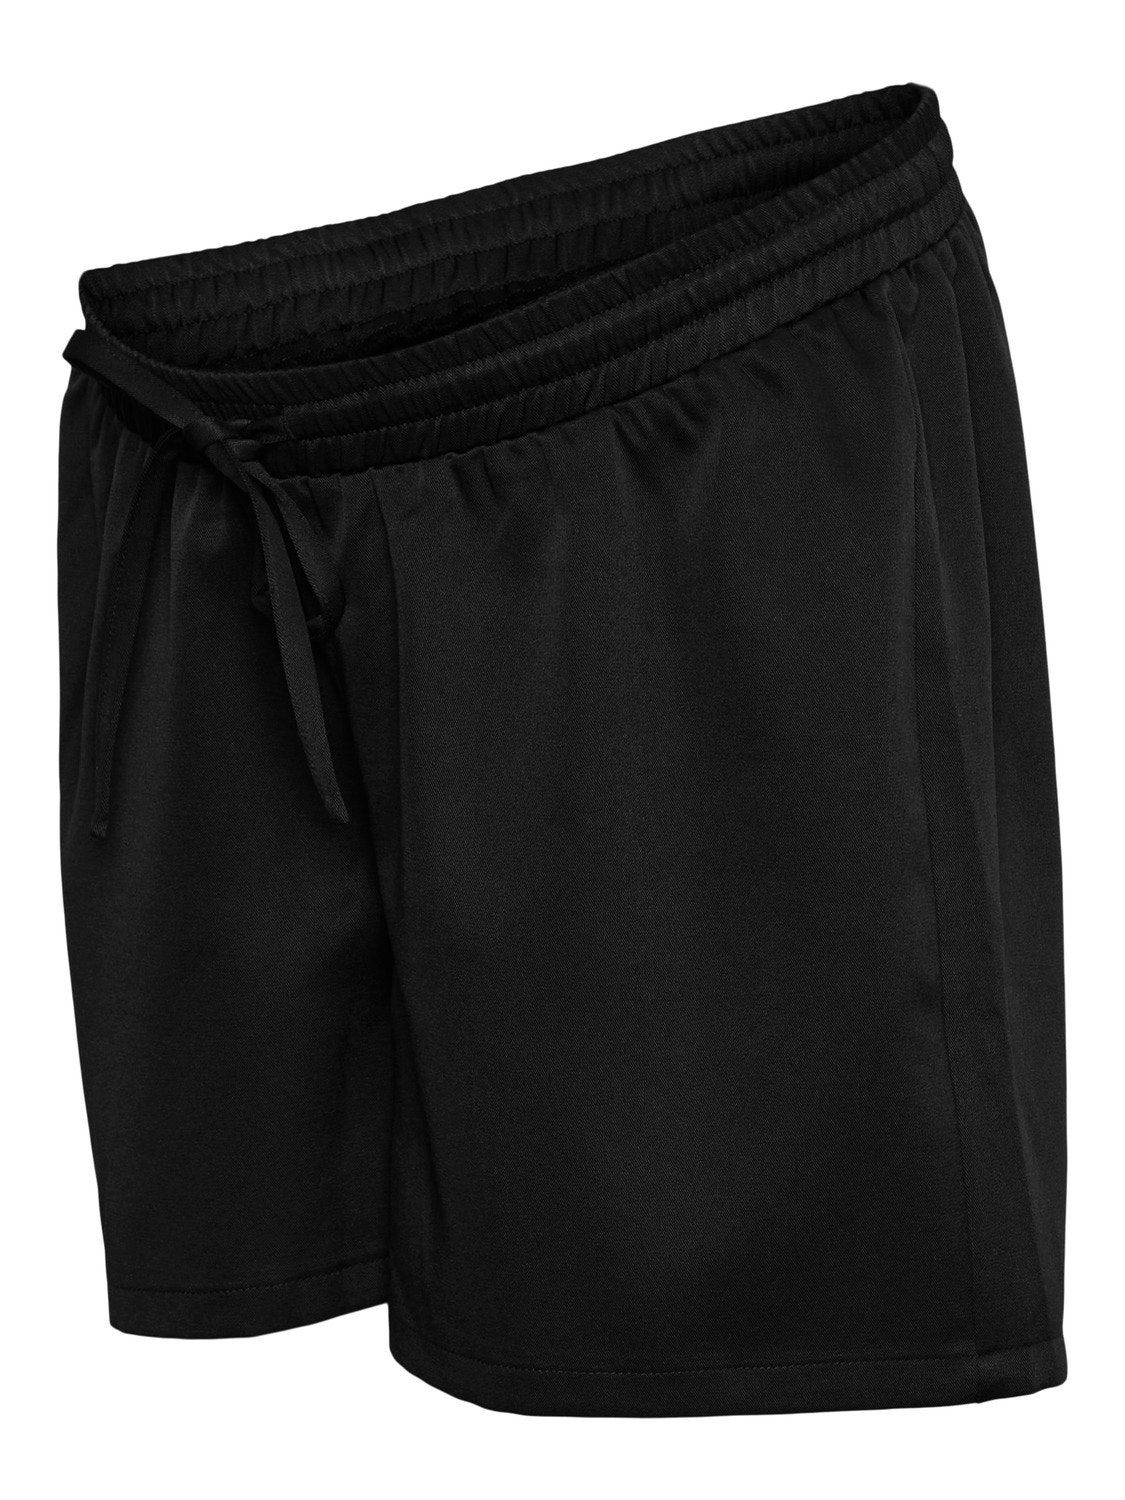 MAMA.LICIOUS Shorts Corte regular Tiro bajo -Black - 20016839